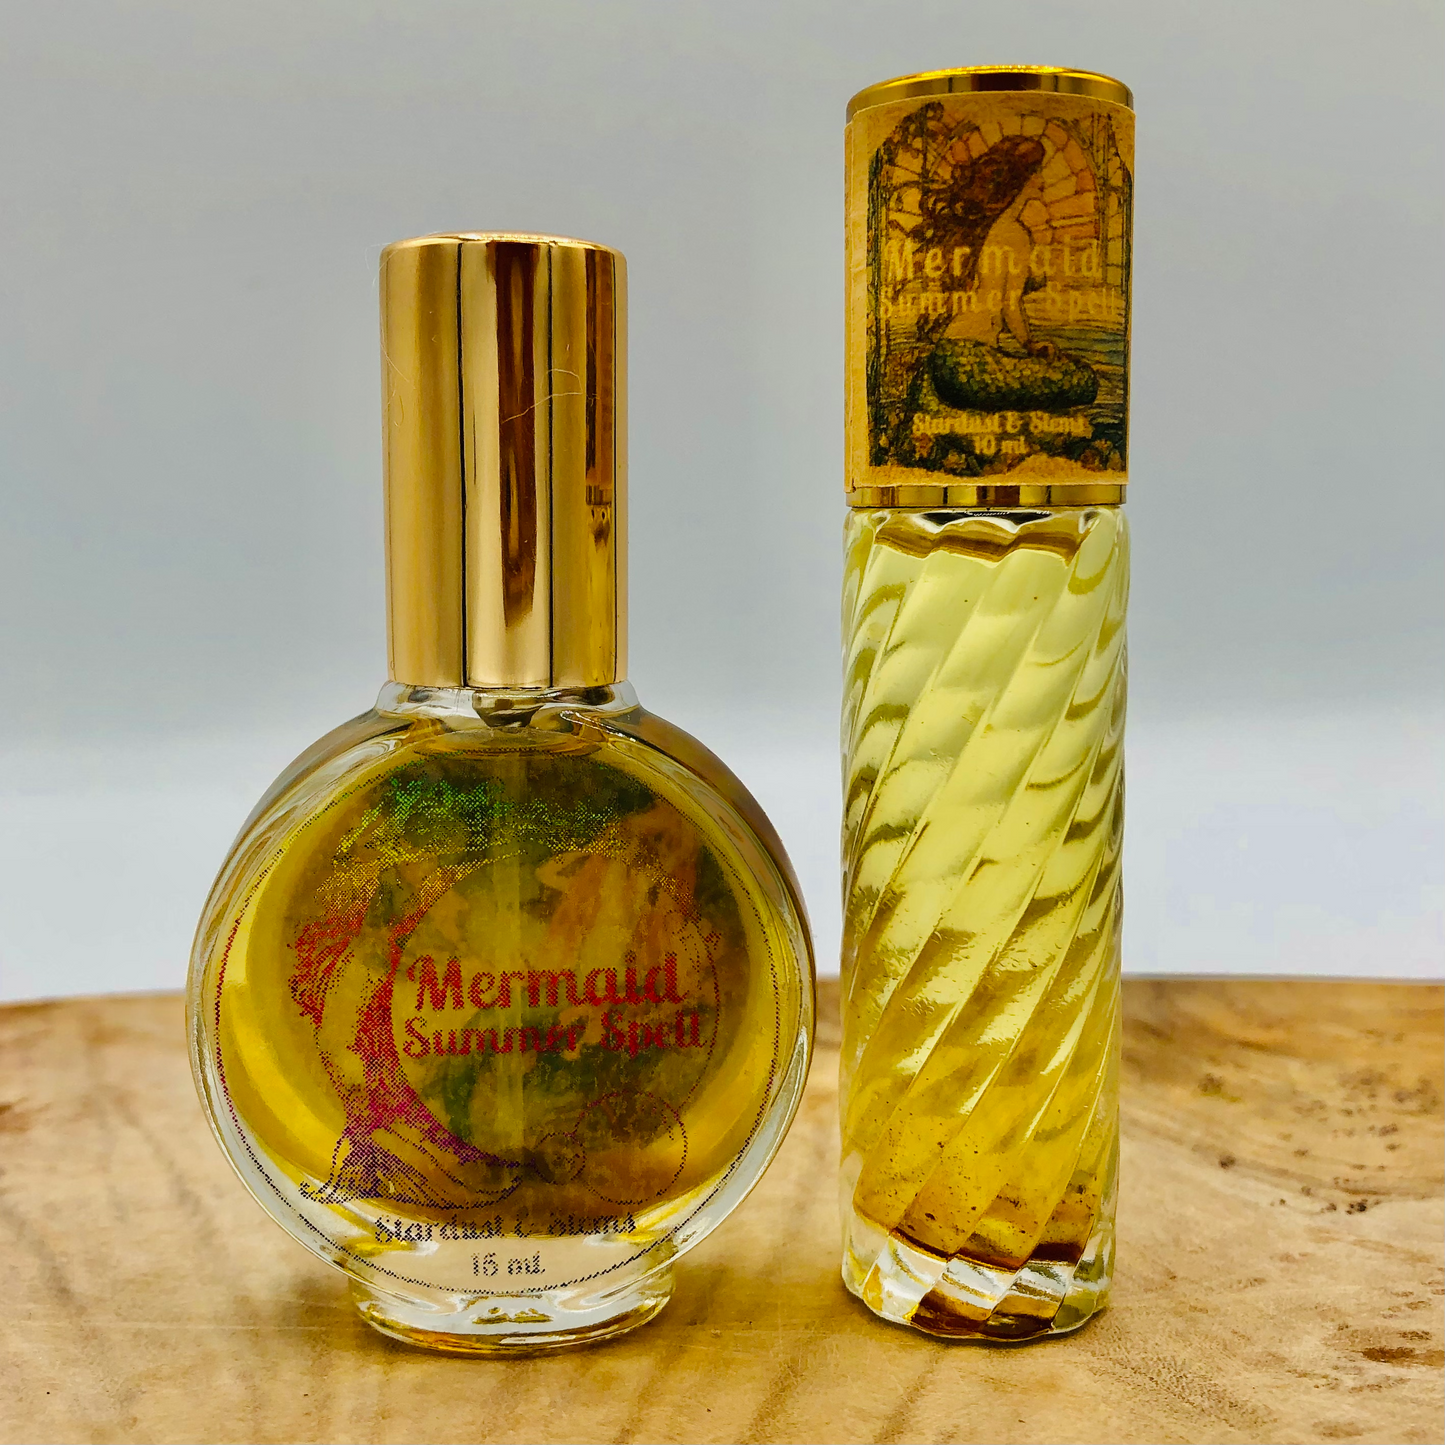 Mermaid Summer Spell Perfume, Best Vanilla Aquatic Scent, Essential Oil Indie Fragrance, Witch Perfume, Crystal Mermaid Crown & Shell Gifts